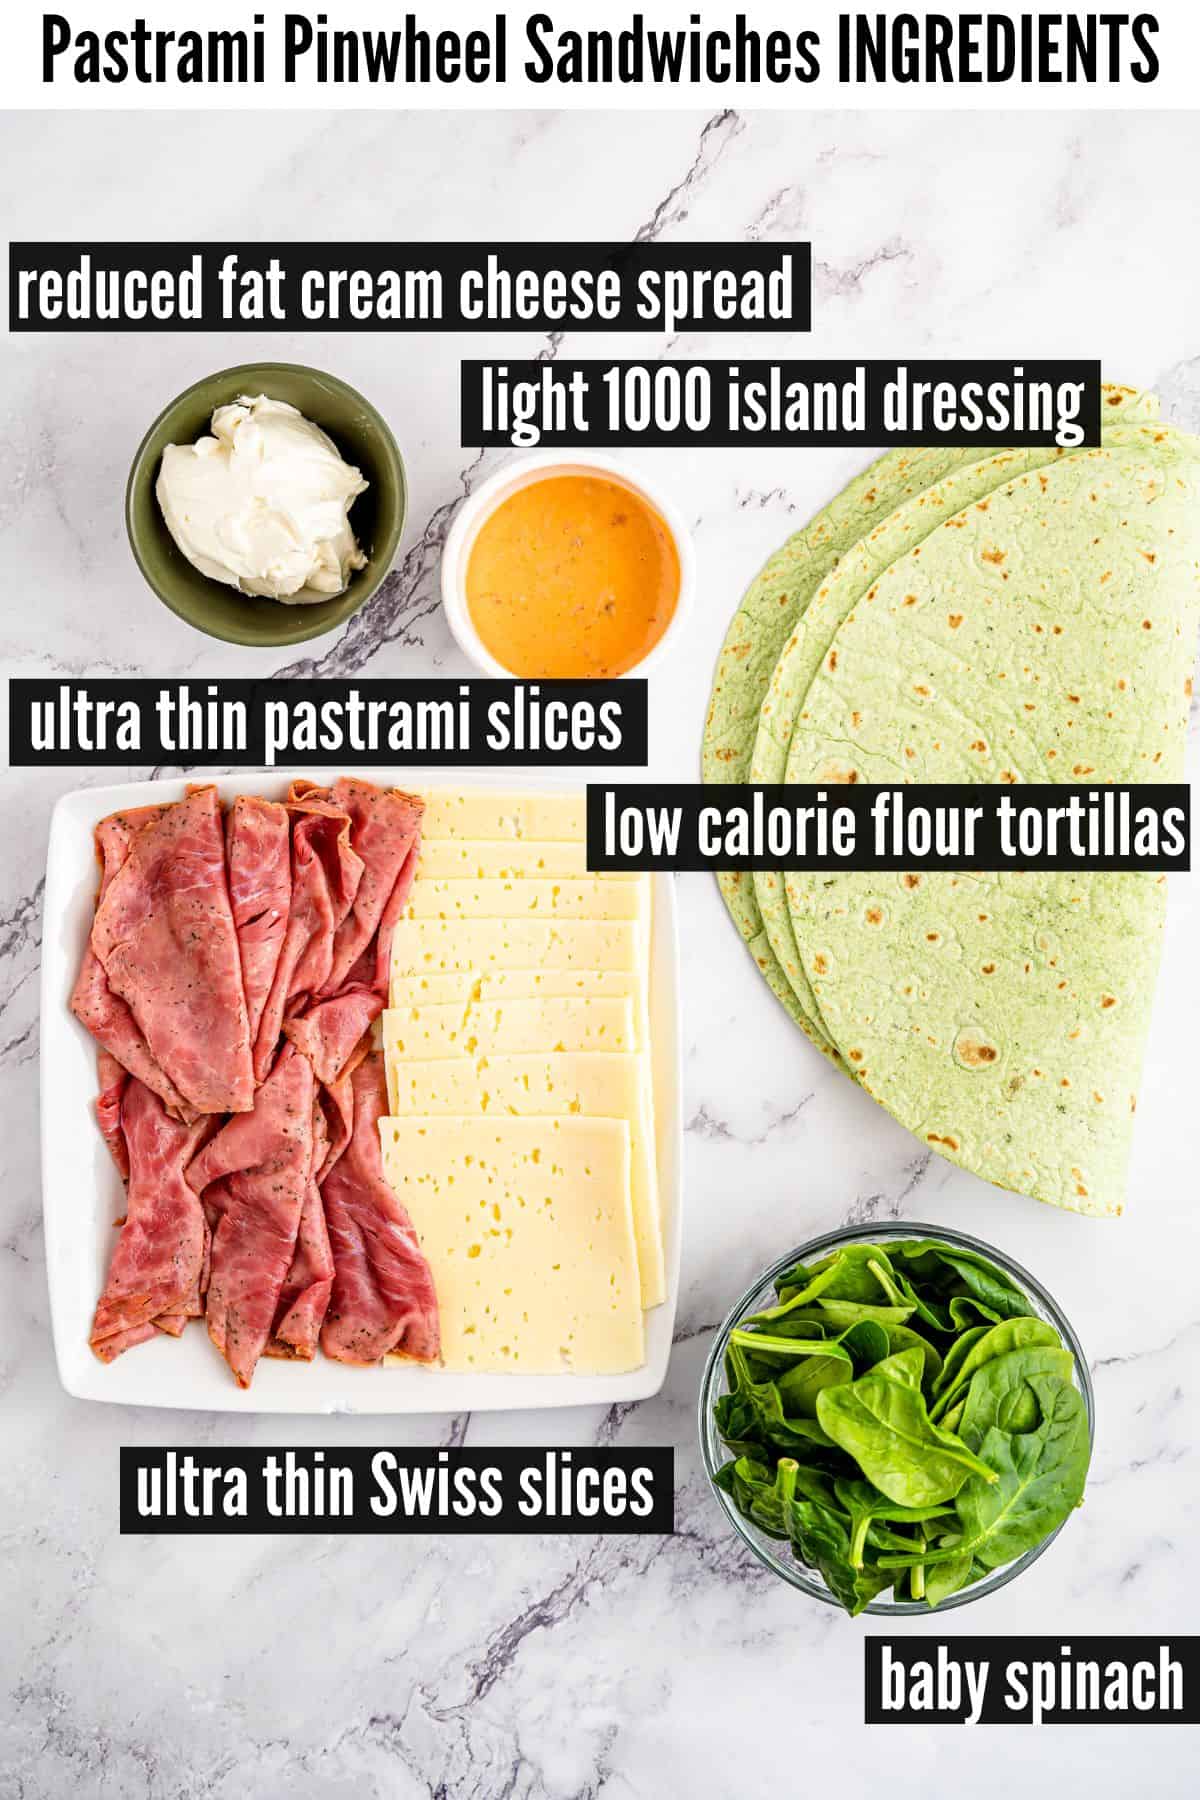 pastrami pinwheel sandwiches labelled ingredients.